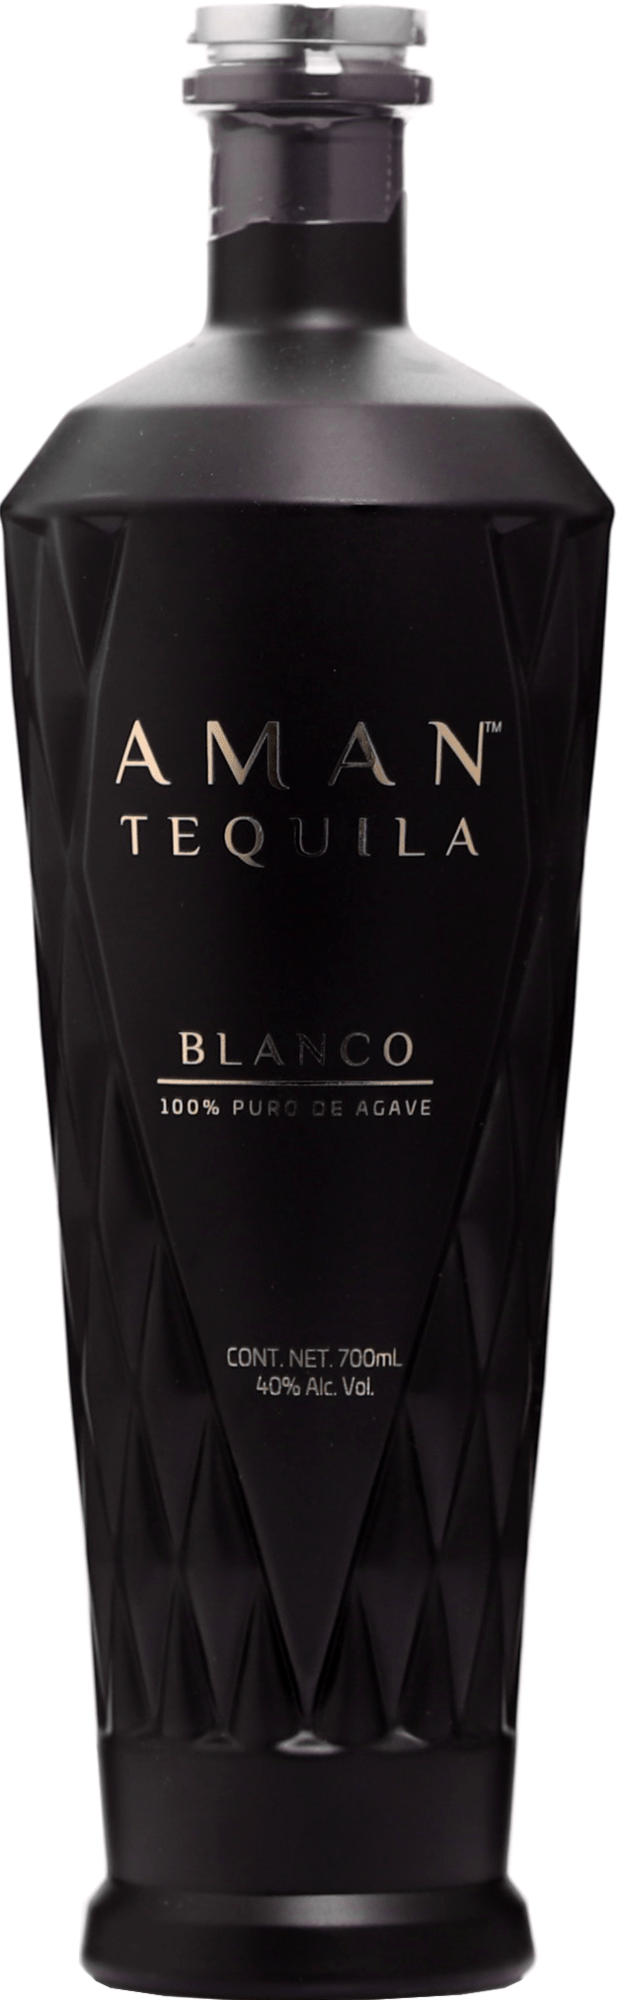 Aman Tequila Blanco 40% 0,7l